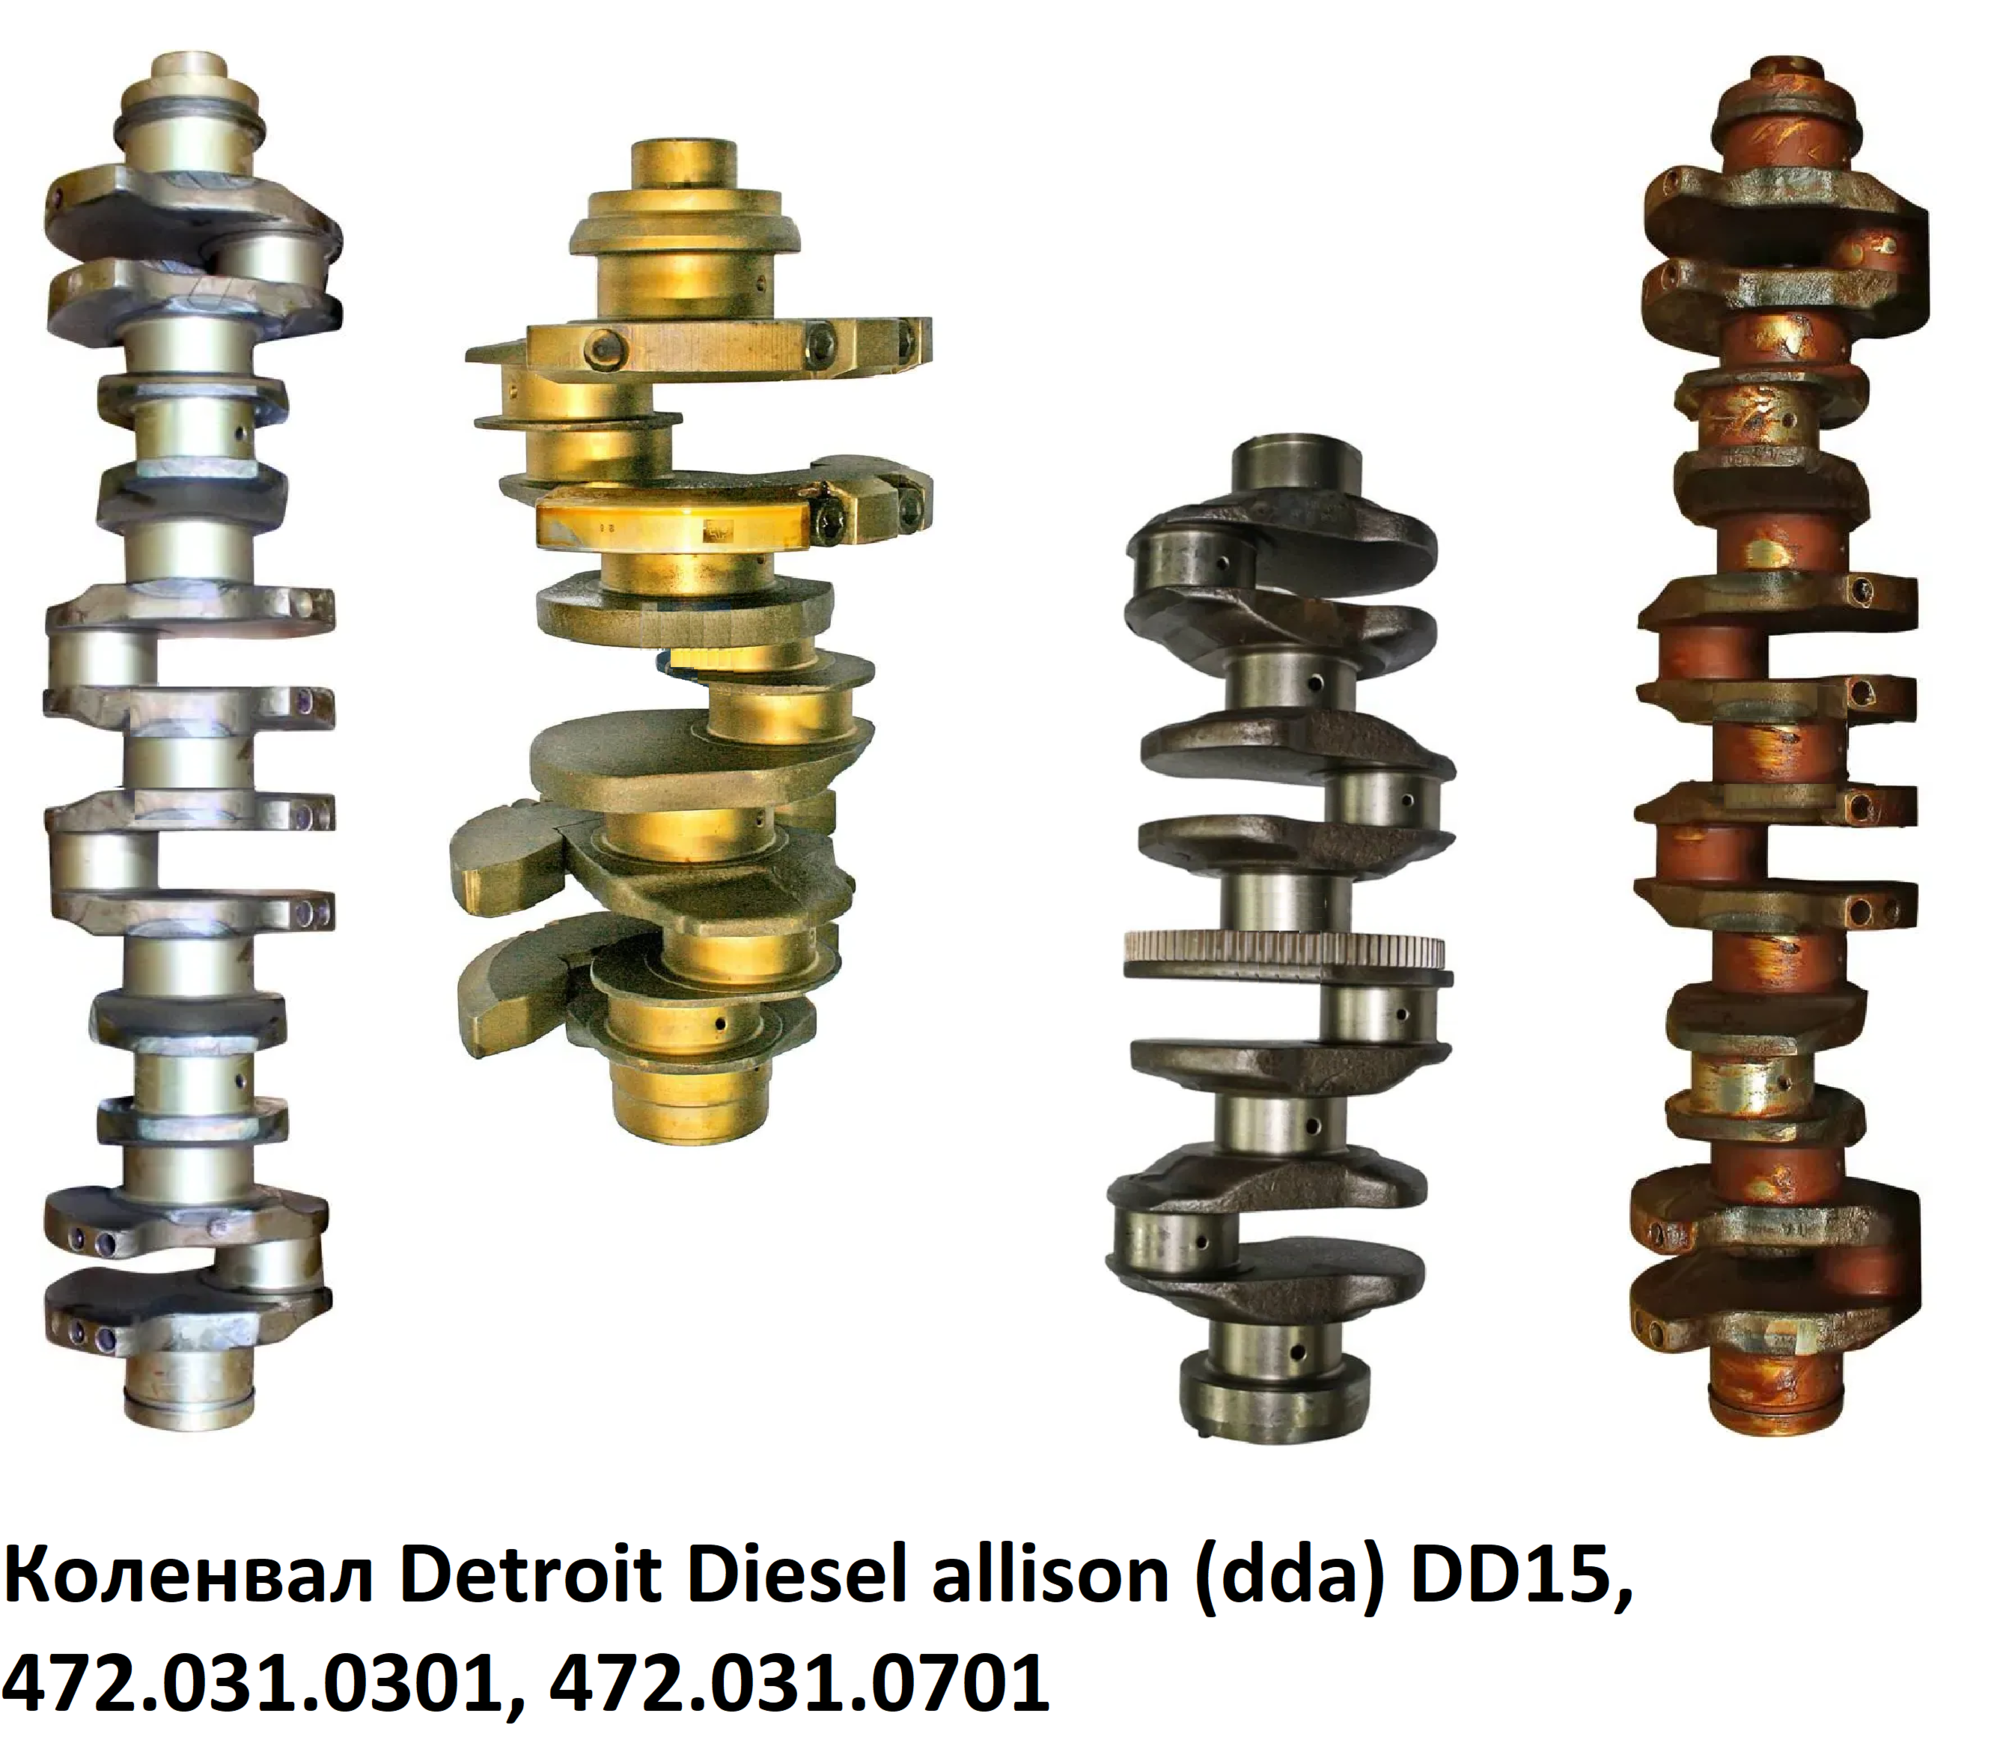 Коленвал Detroit Diesel allison (dda) DD15, 472.031.0301, 472.031.0701, 4720310301, 4720310701